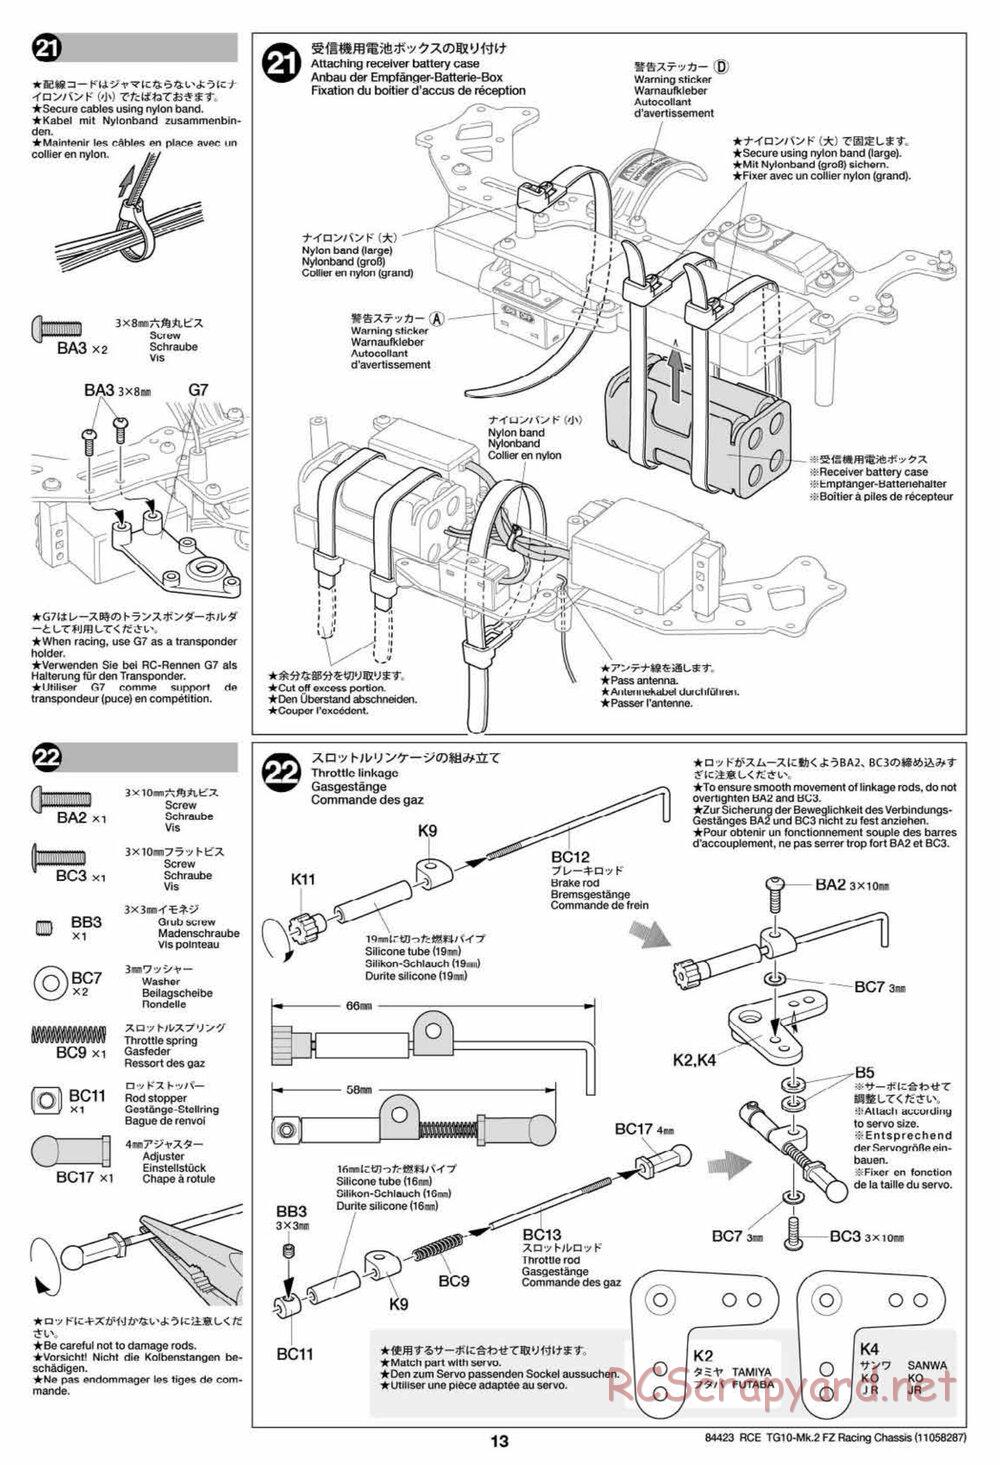 Tamiya - TG10 Mk.2 FZ Racing Chassis - Manual - Page 13